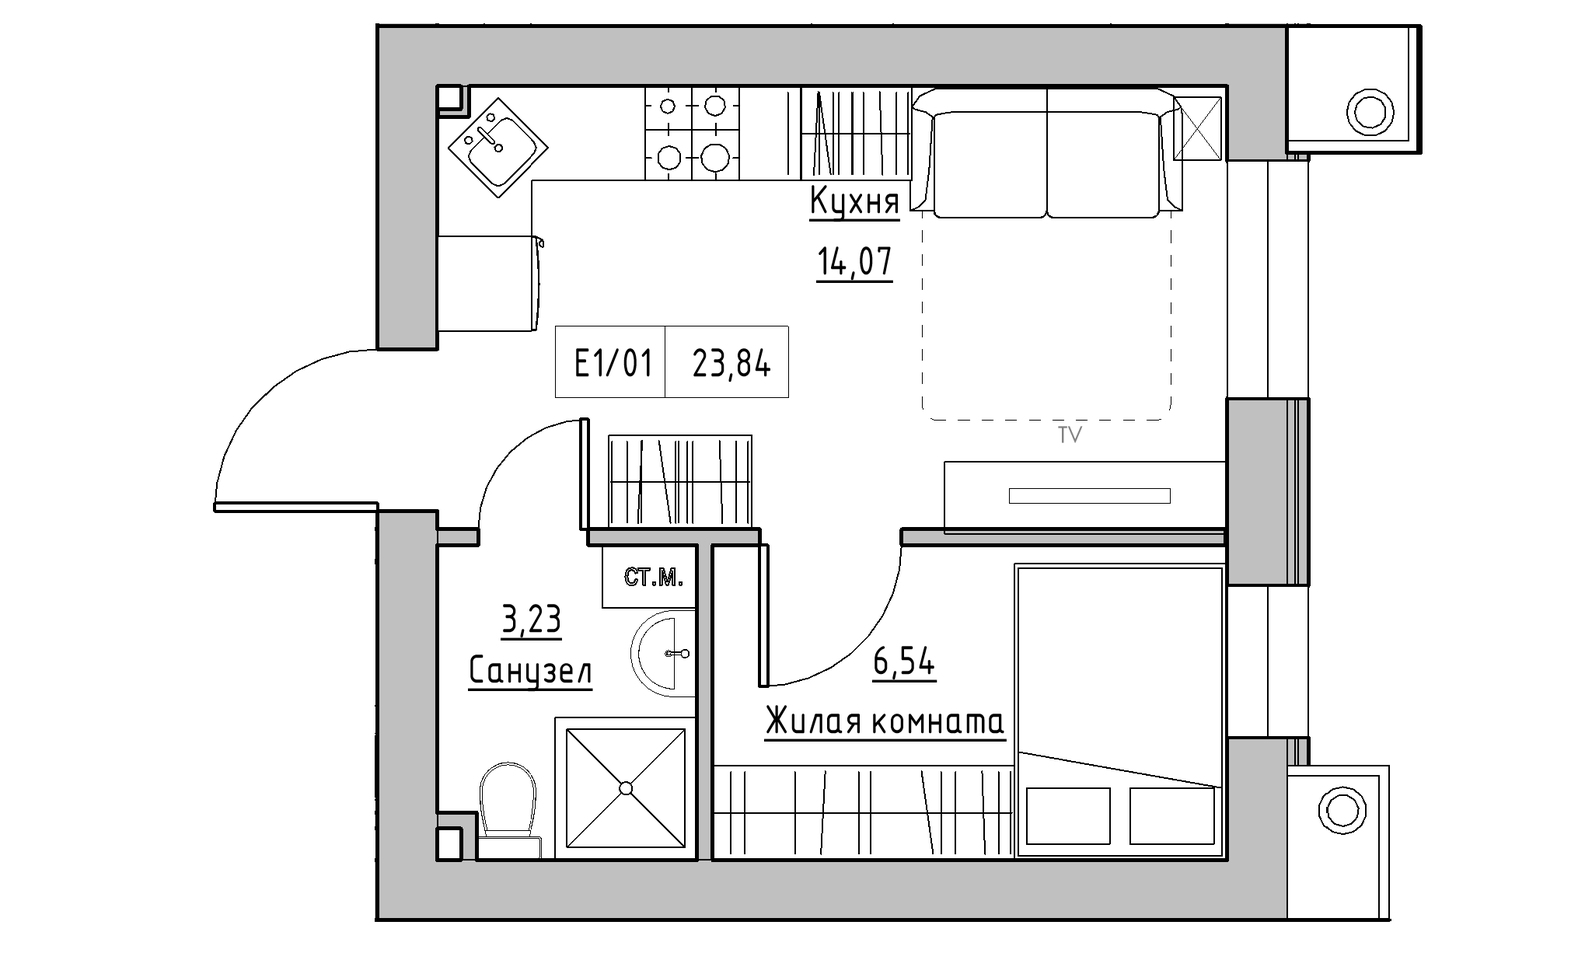 Planning 1-rm flats area 23.84m2, KS-014-01/0011.